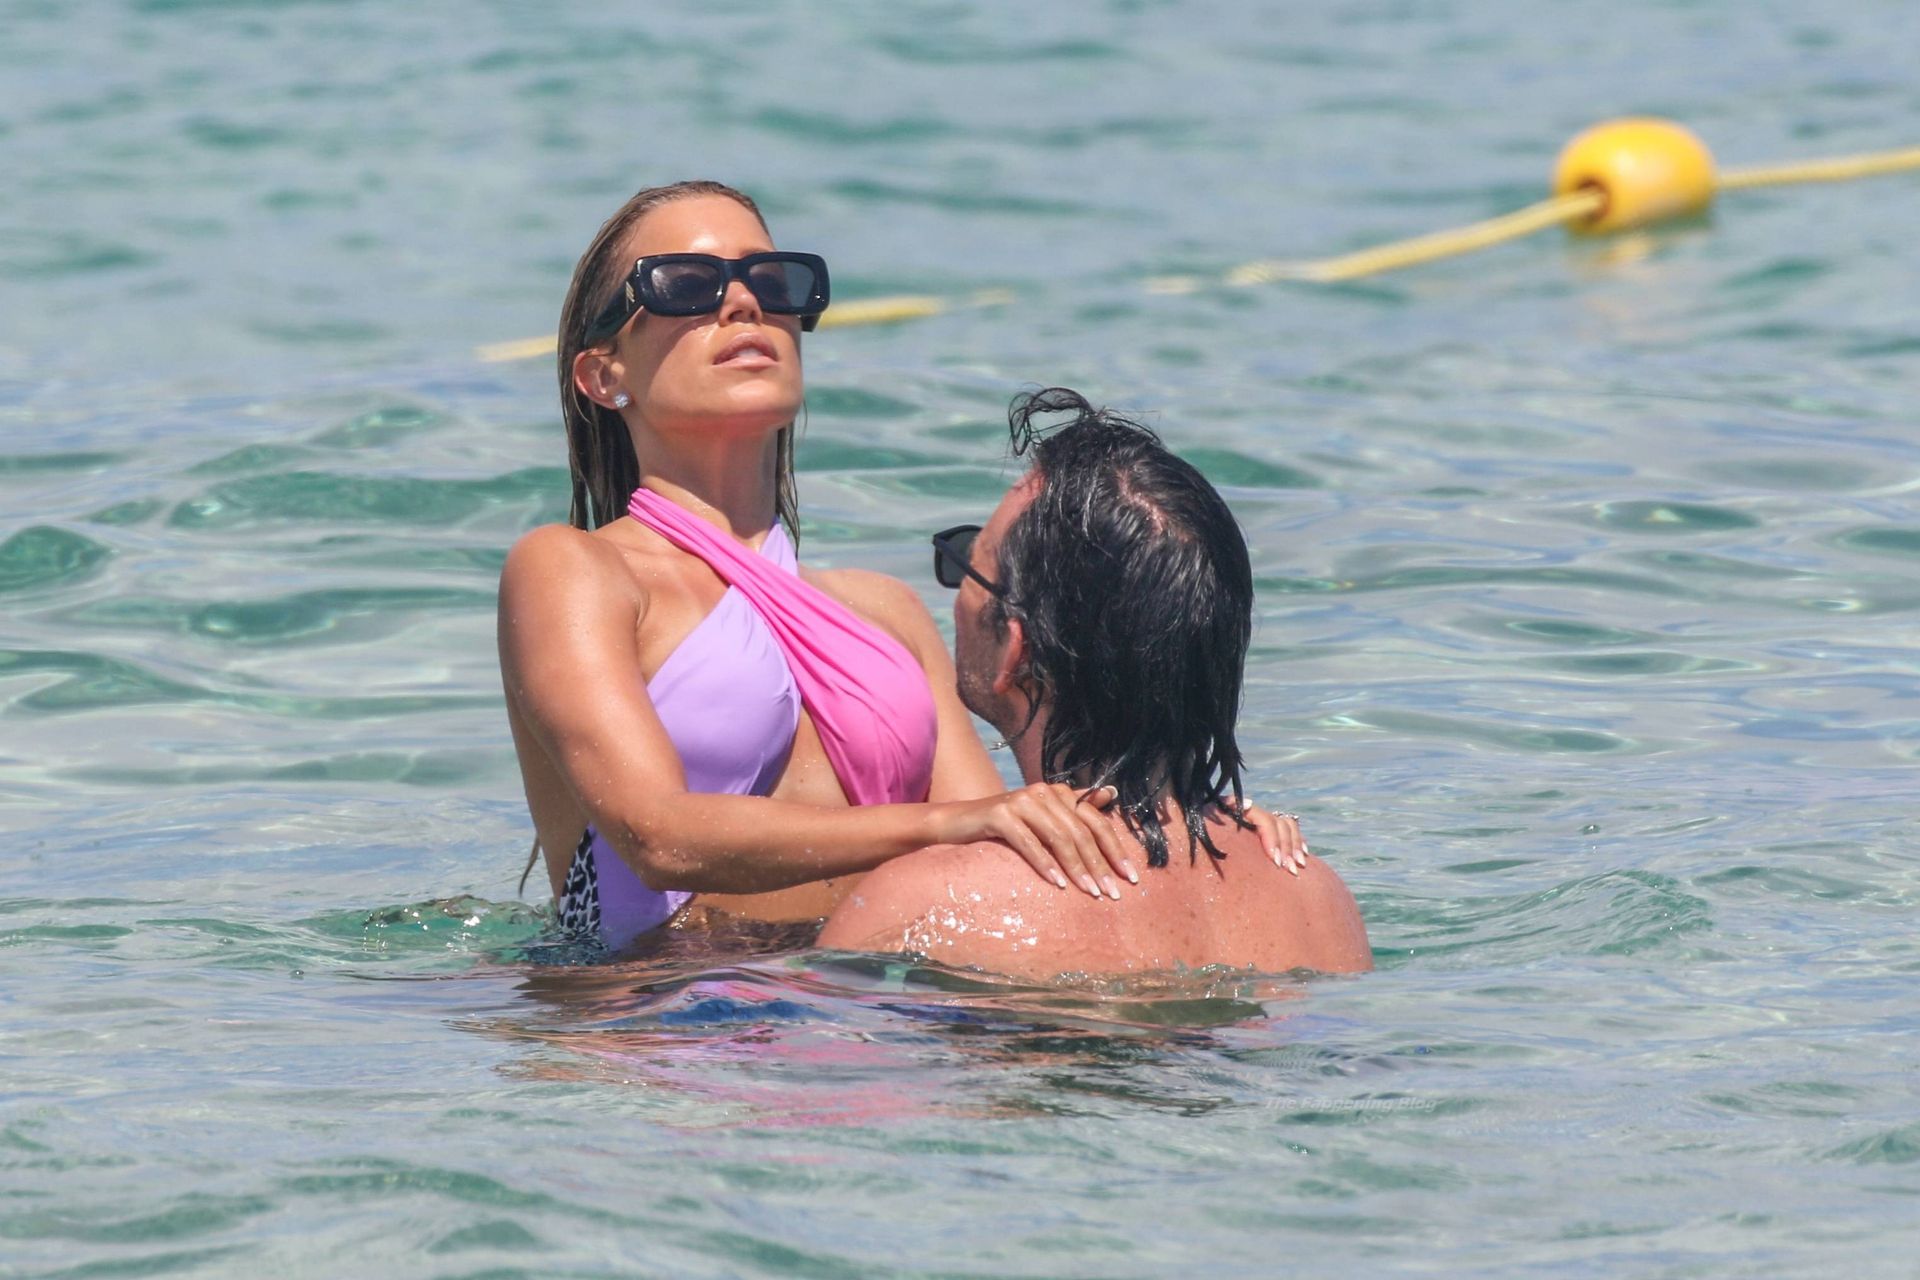 Sylvie Meis & Niclas Cast
ello Enjoy a Beach Day in Saint Tropez (120 Photos)